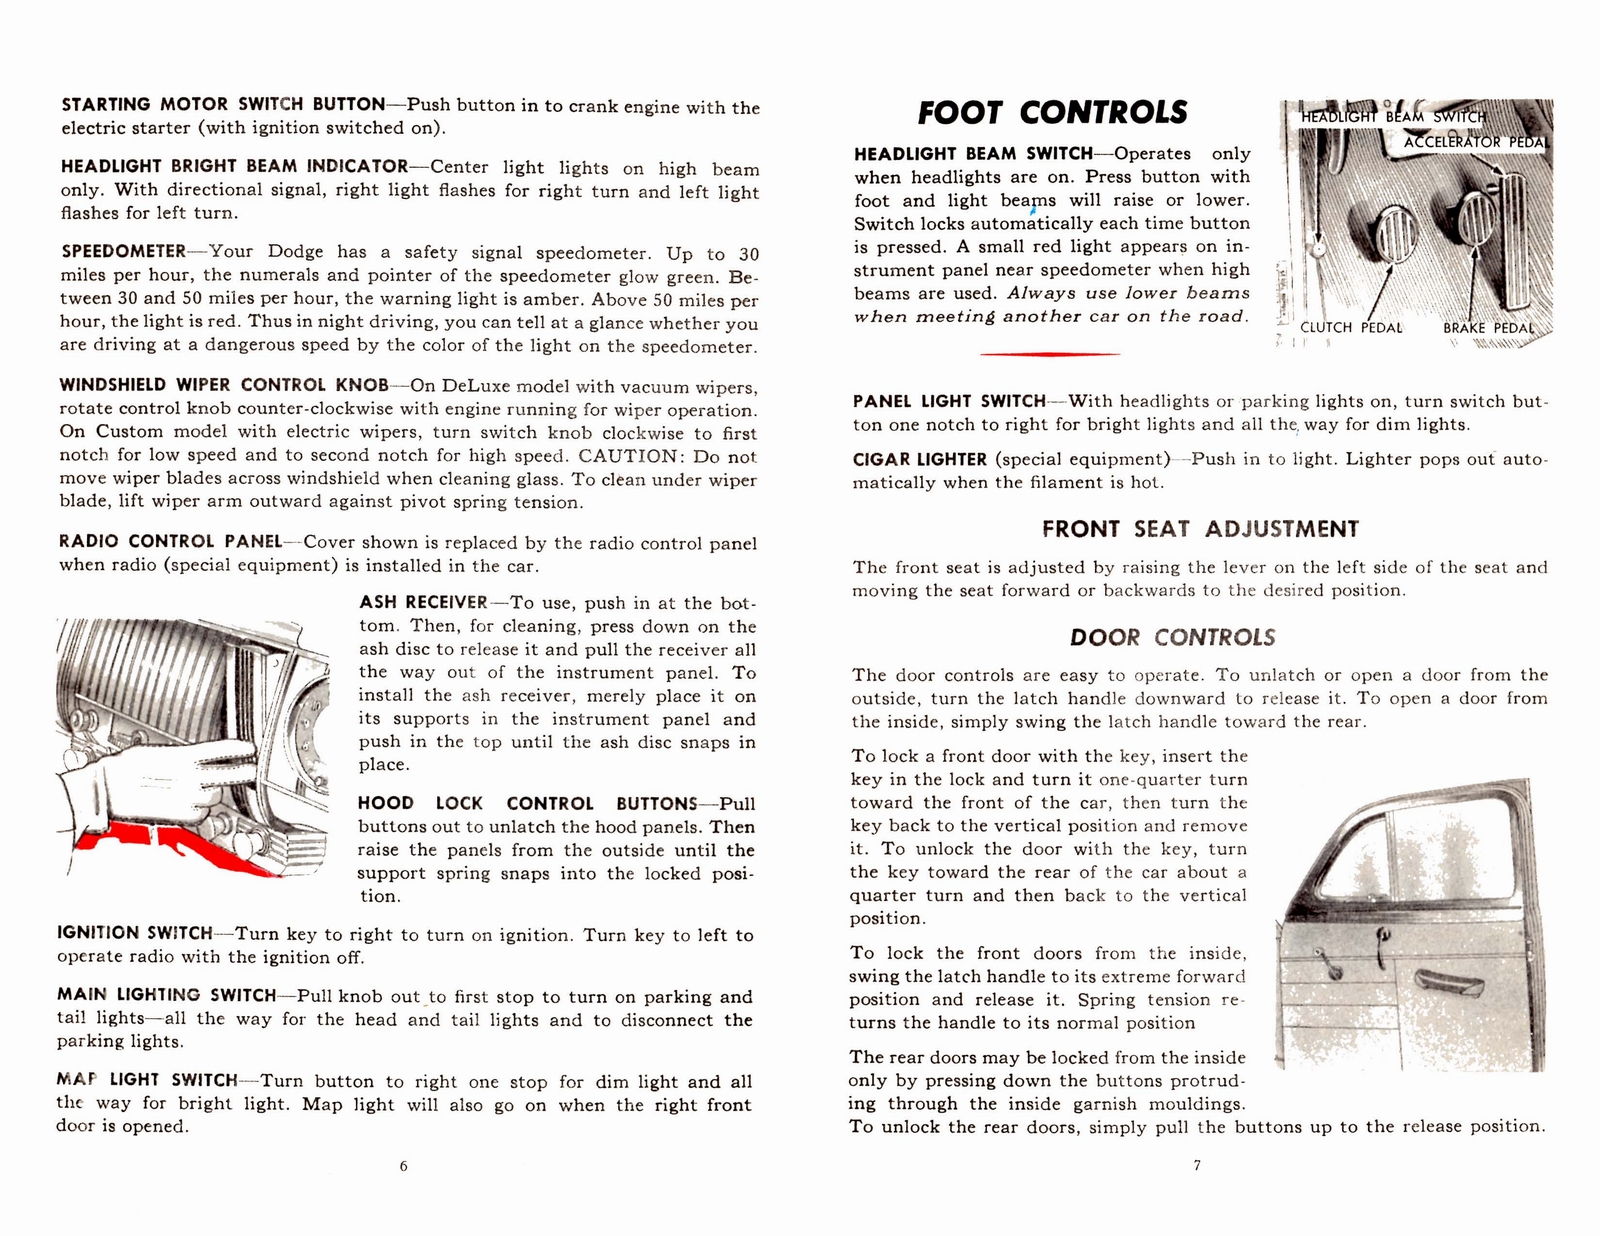 n_1947 Dodge Manual-06-07.jpg